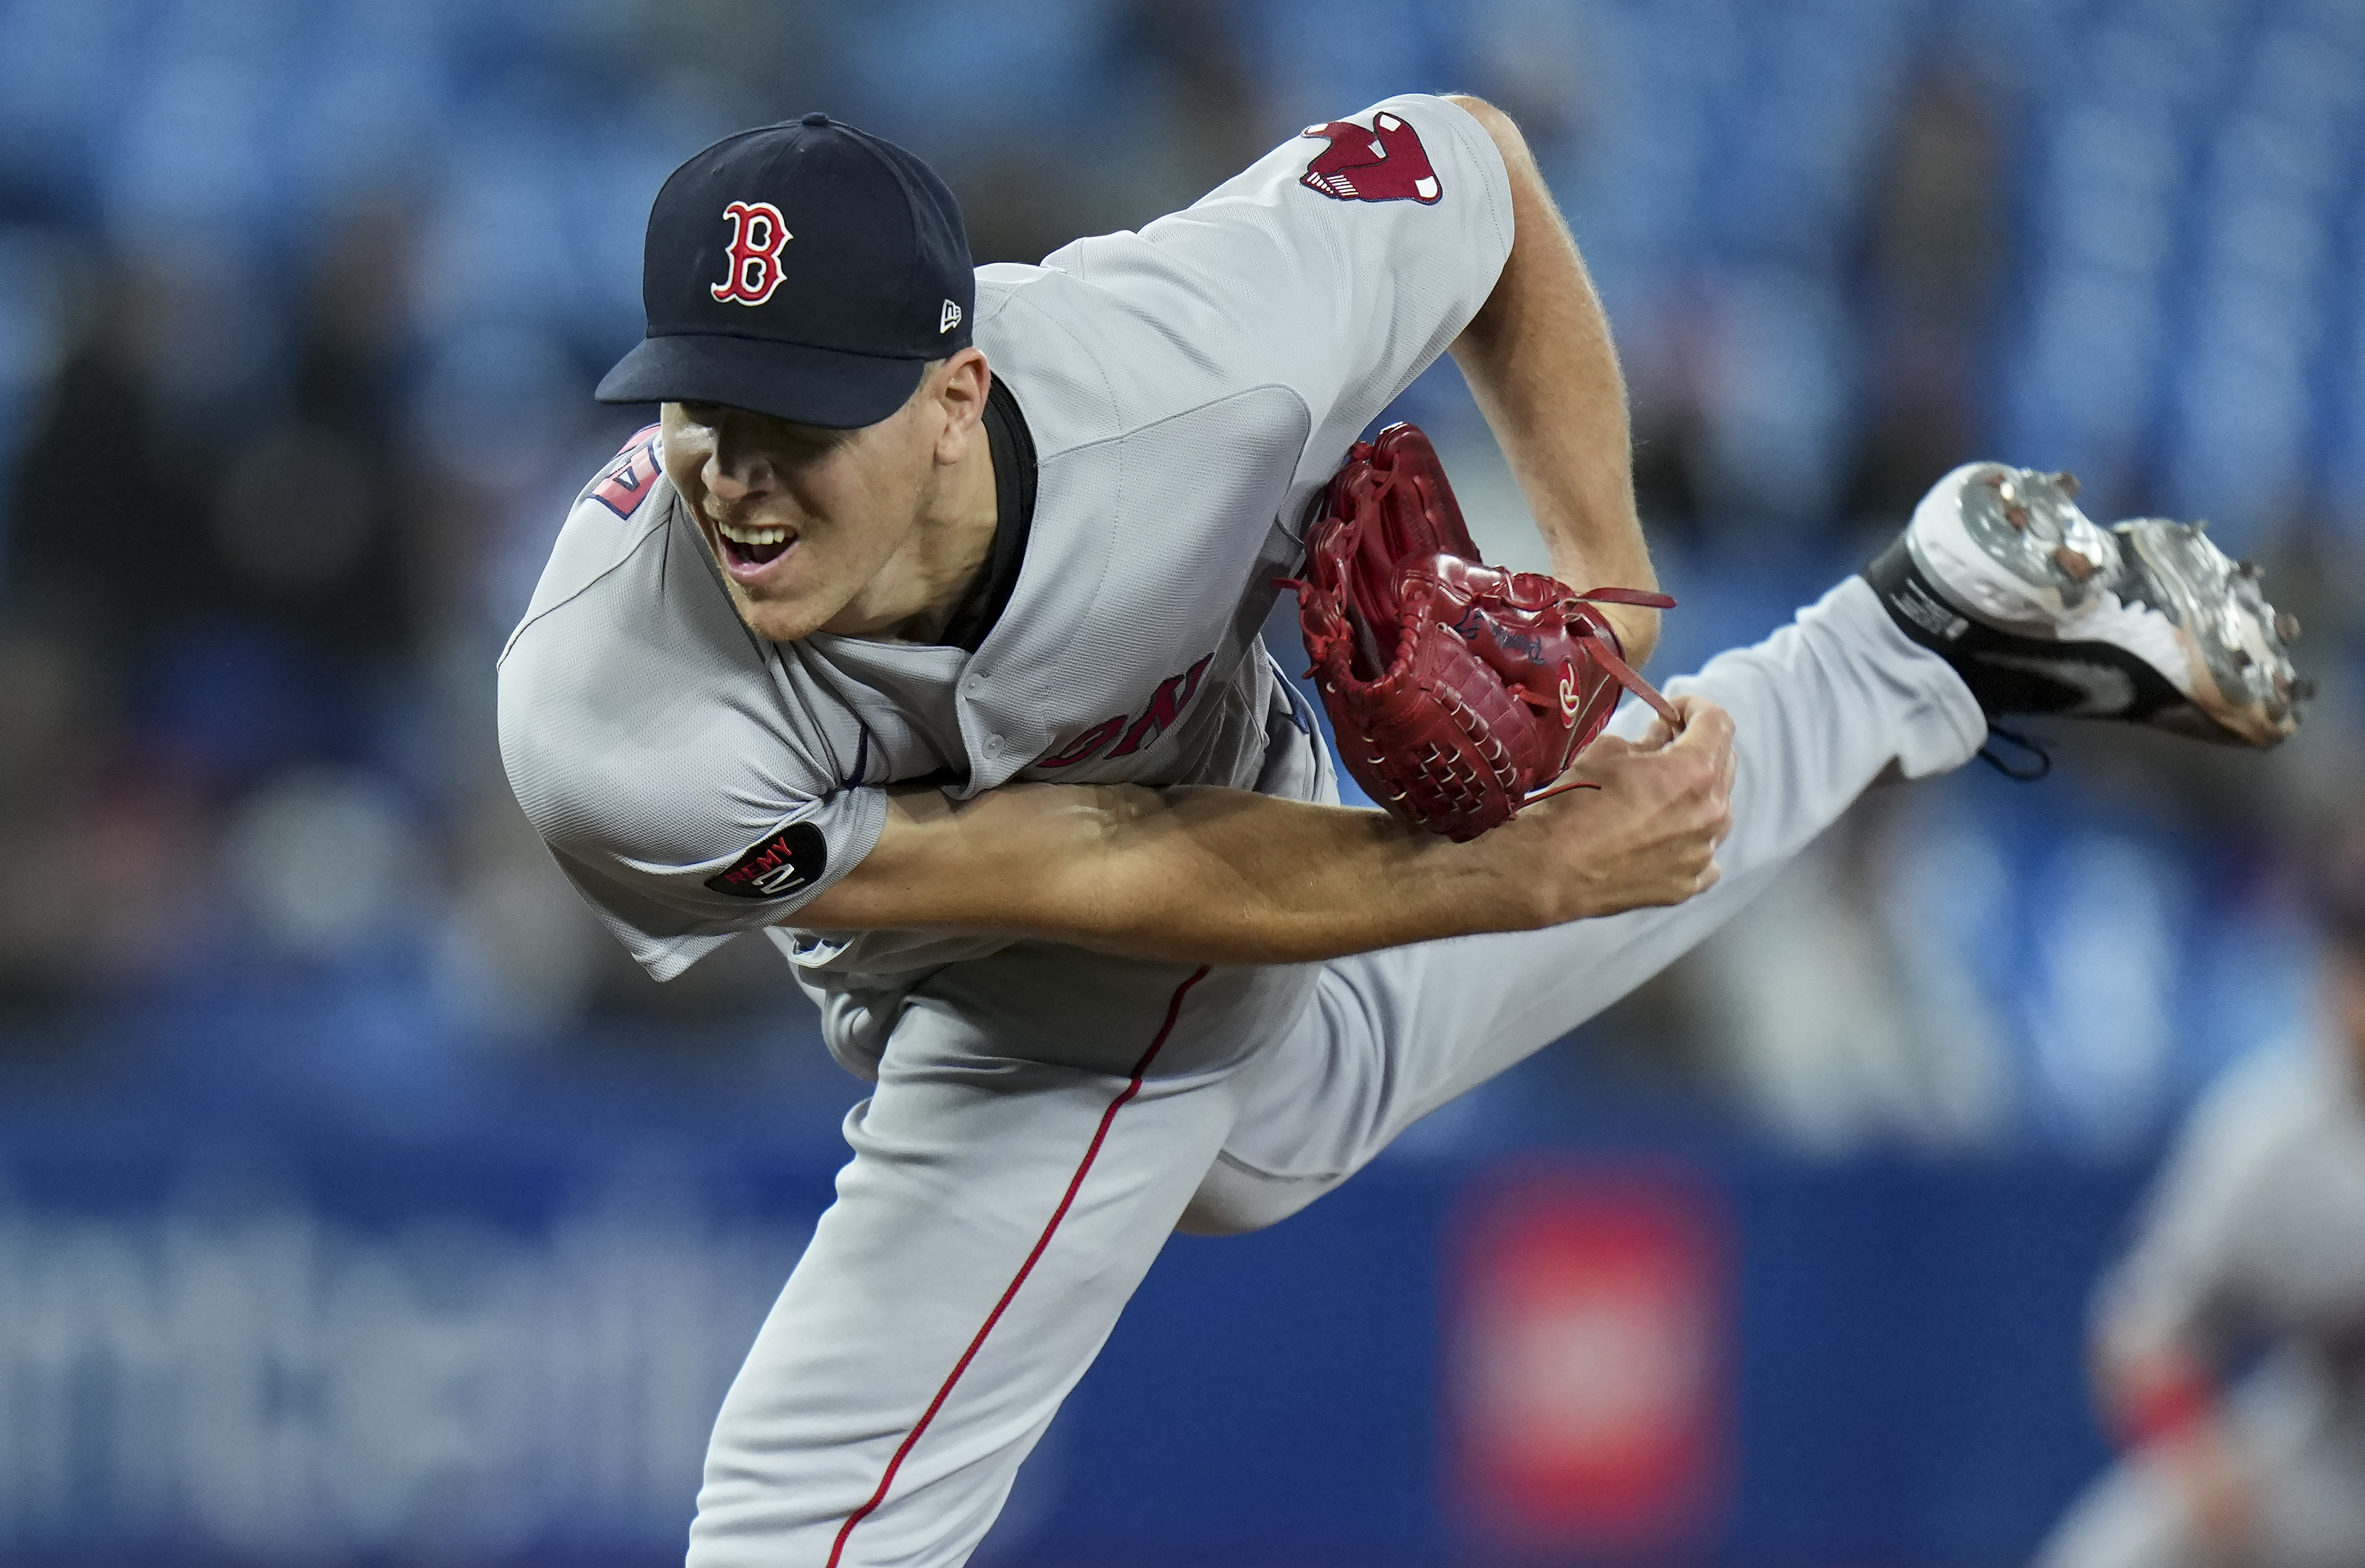 Injuries, brawl mar Red Sox sweep of Rays – Boston Herald